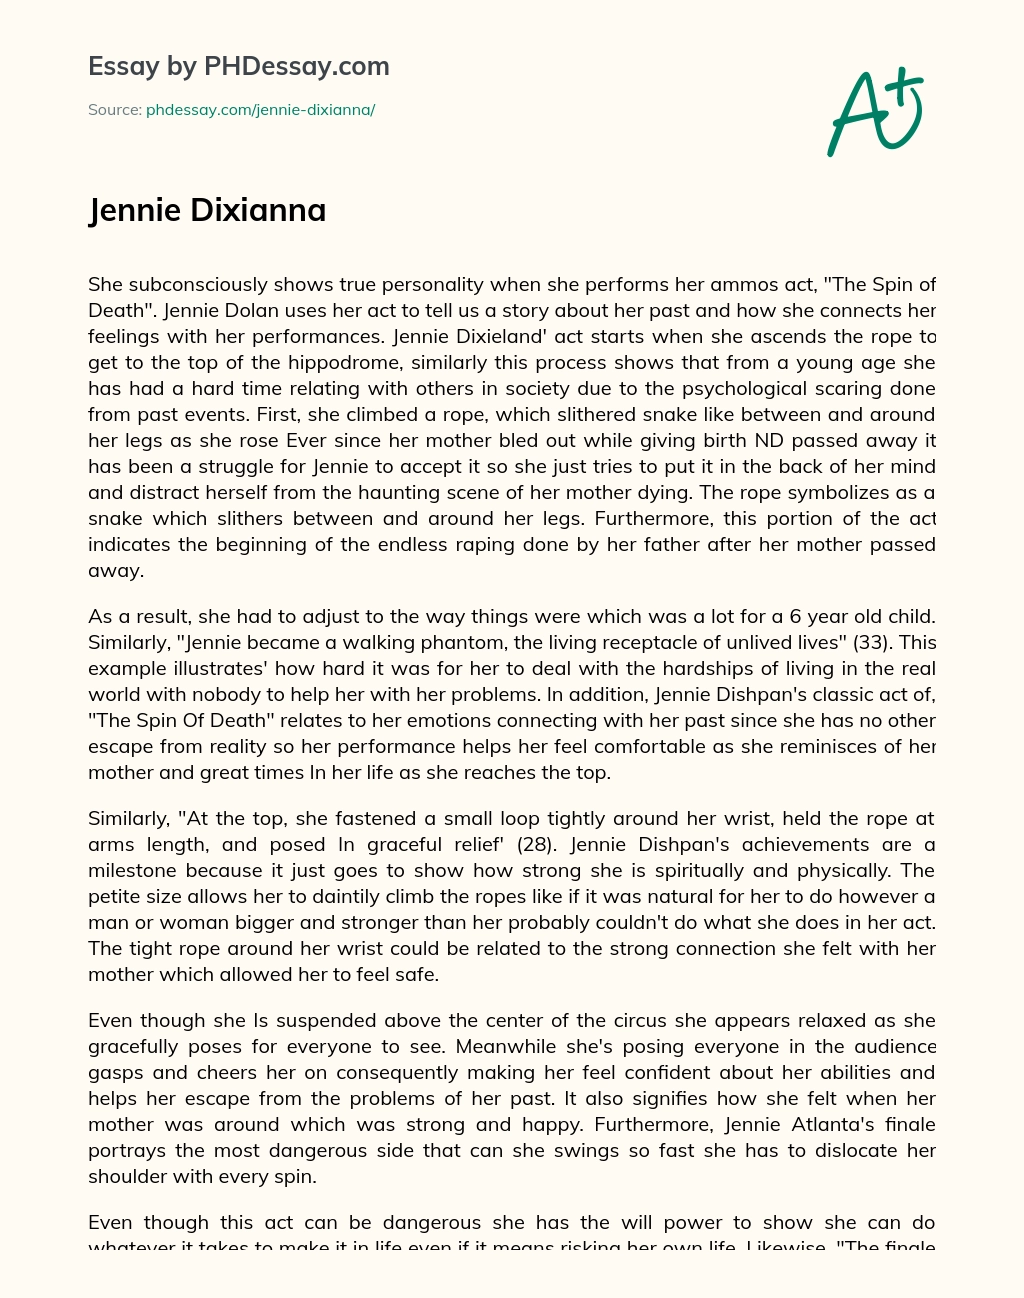 Jennie Dixianna essay